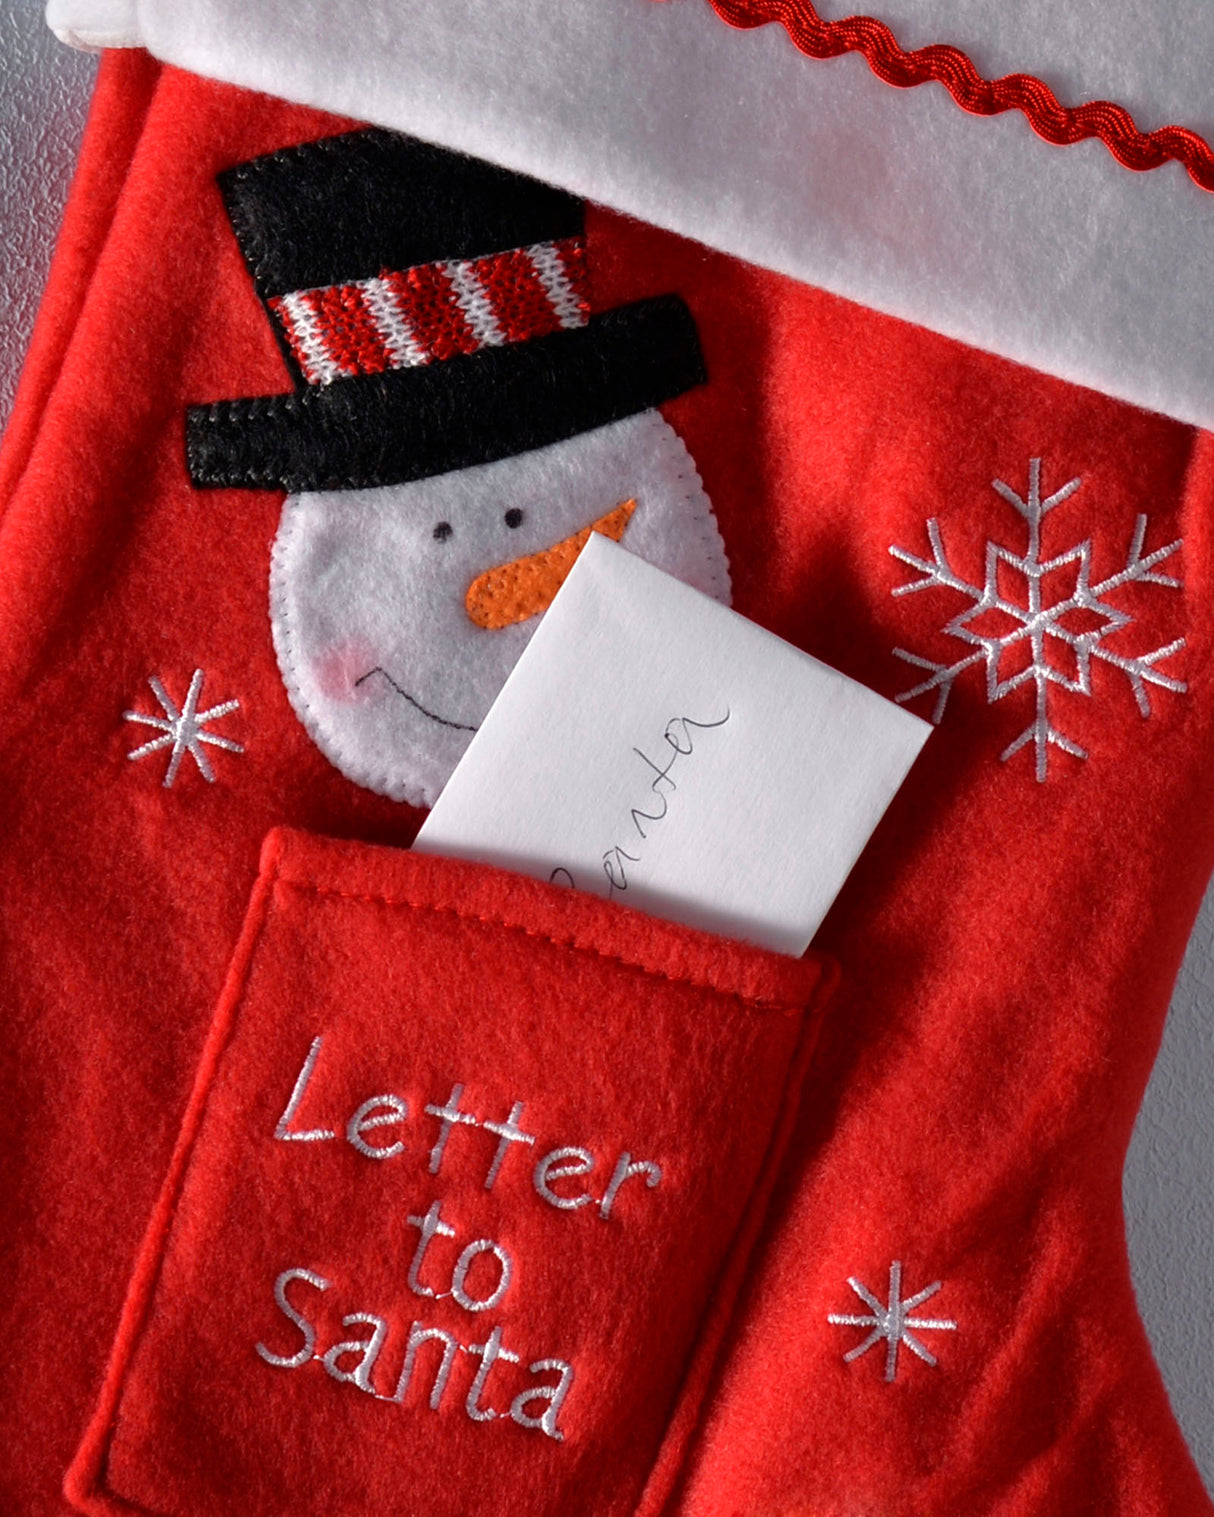 Snowman Stocking, Red, 48 cm